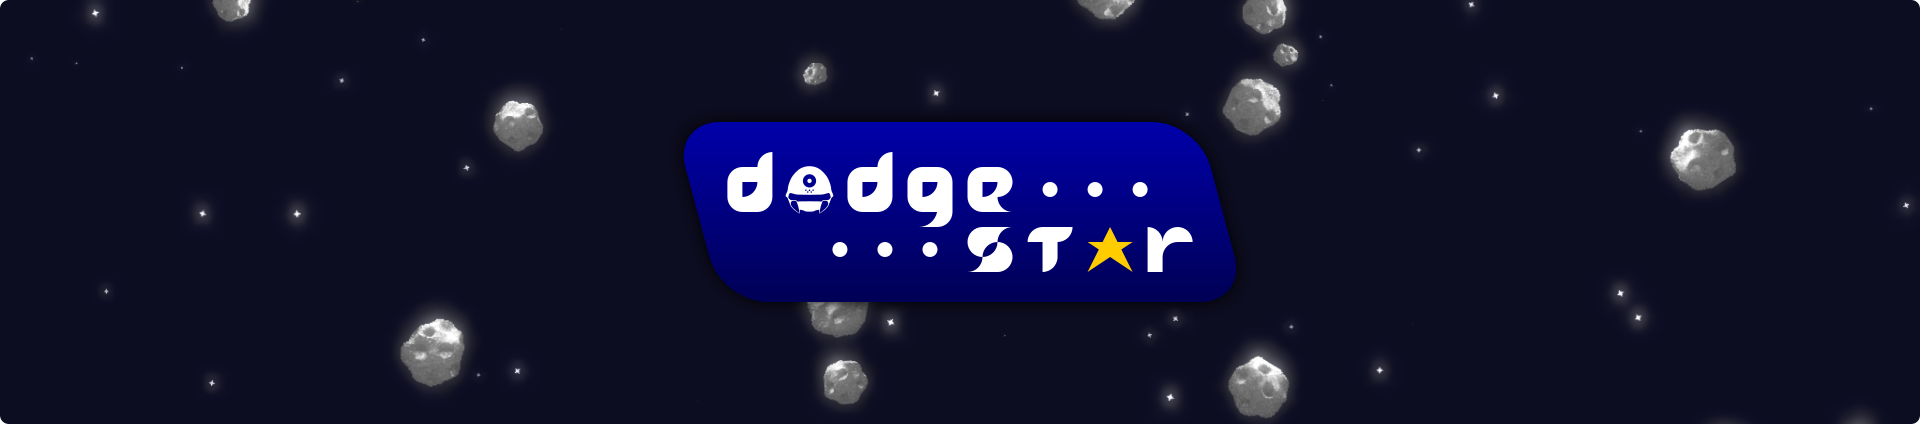 DodgeStar